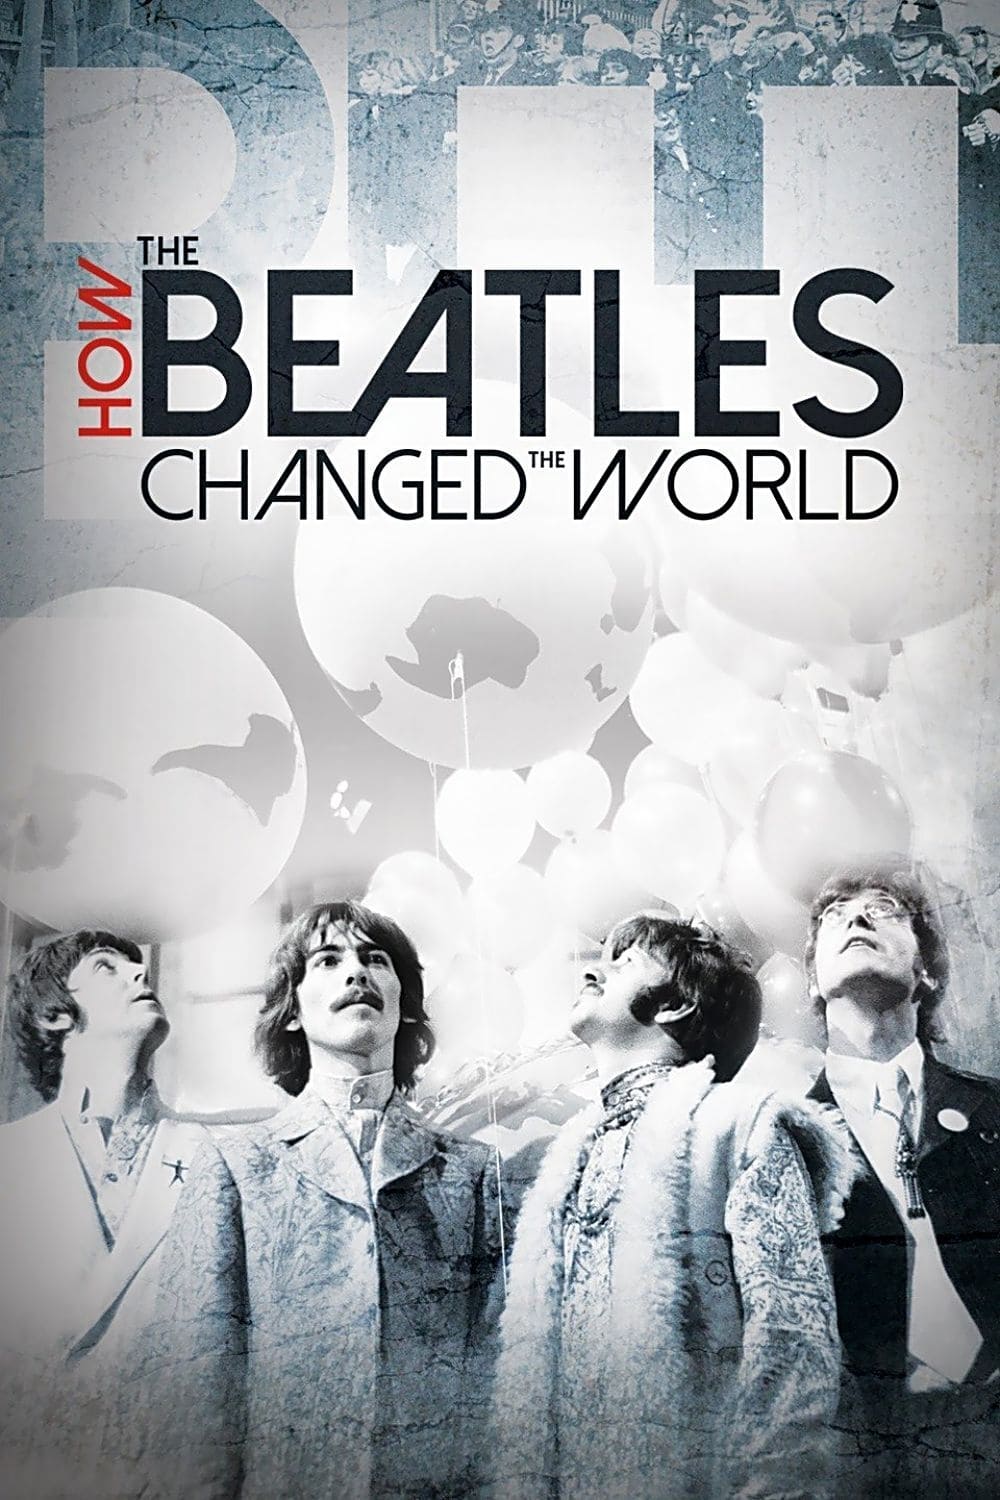 The Beatles: Ban Nhạc Thay Đổi Thế Giới (How the Beatles Changed the World) [2017]